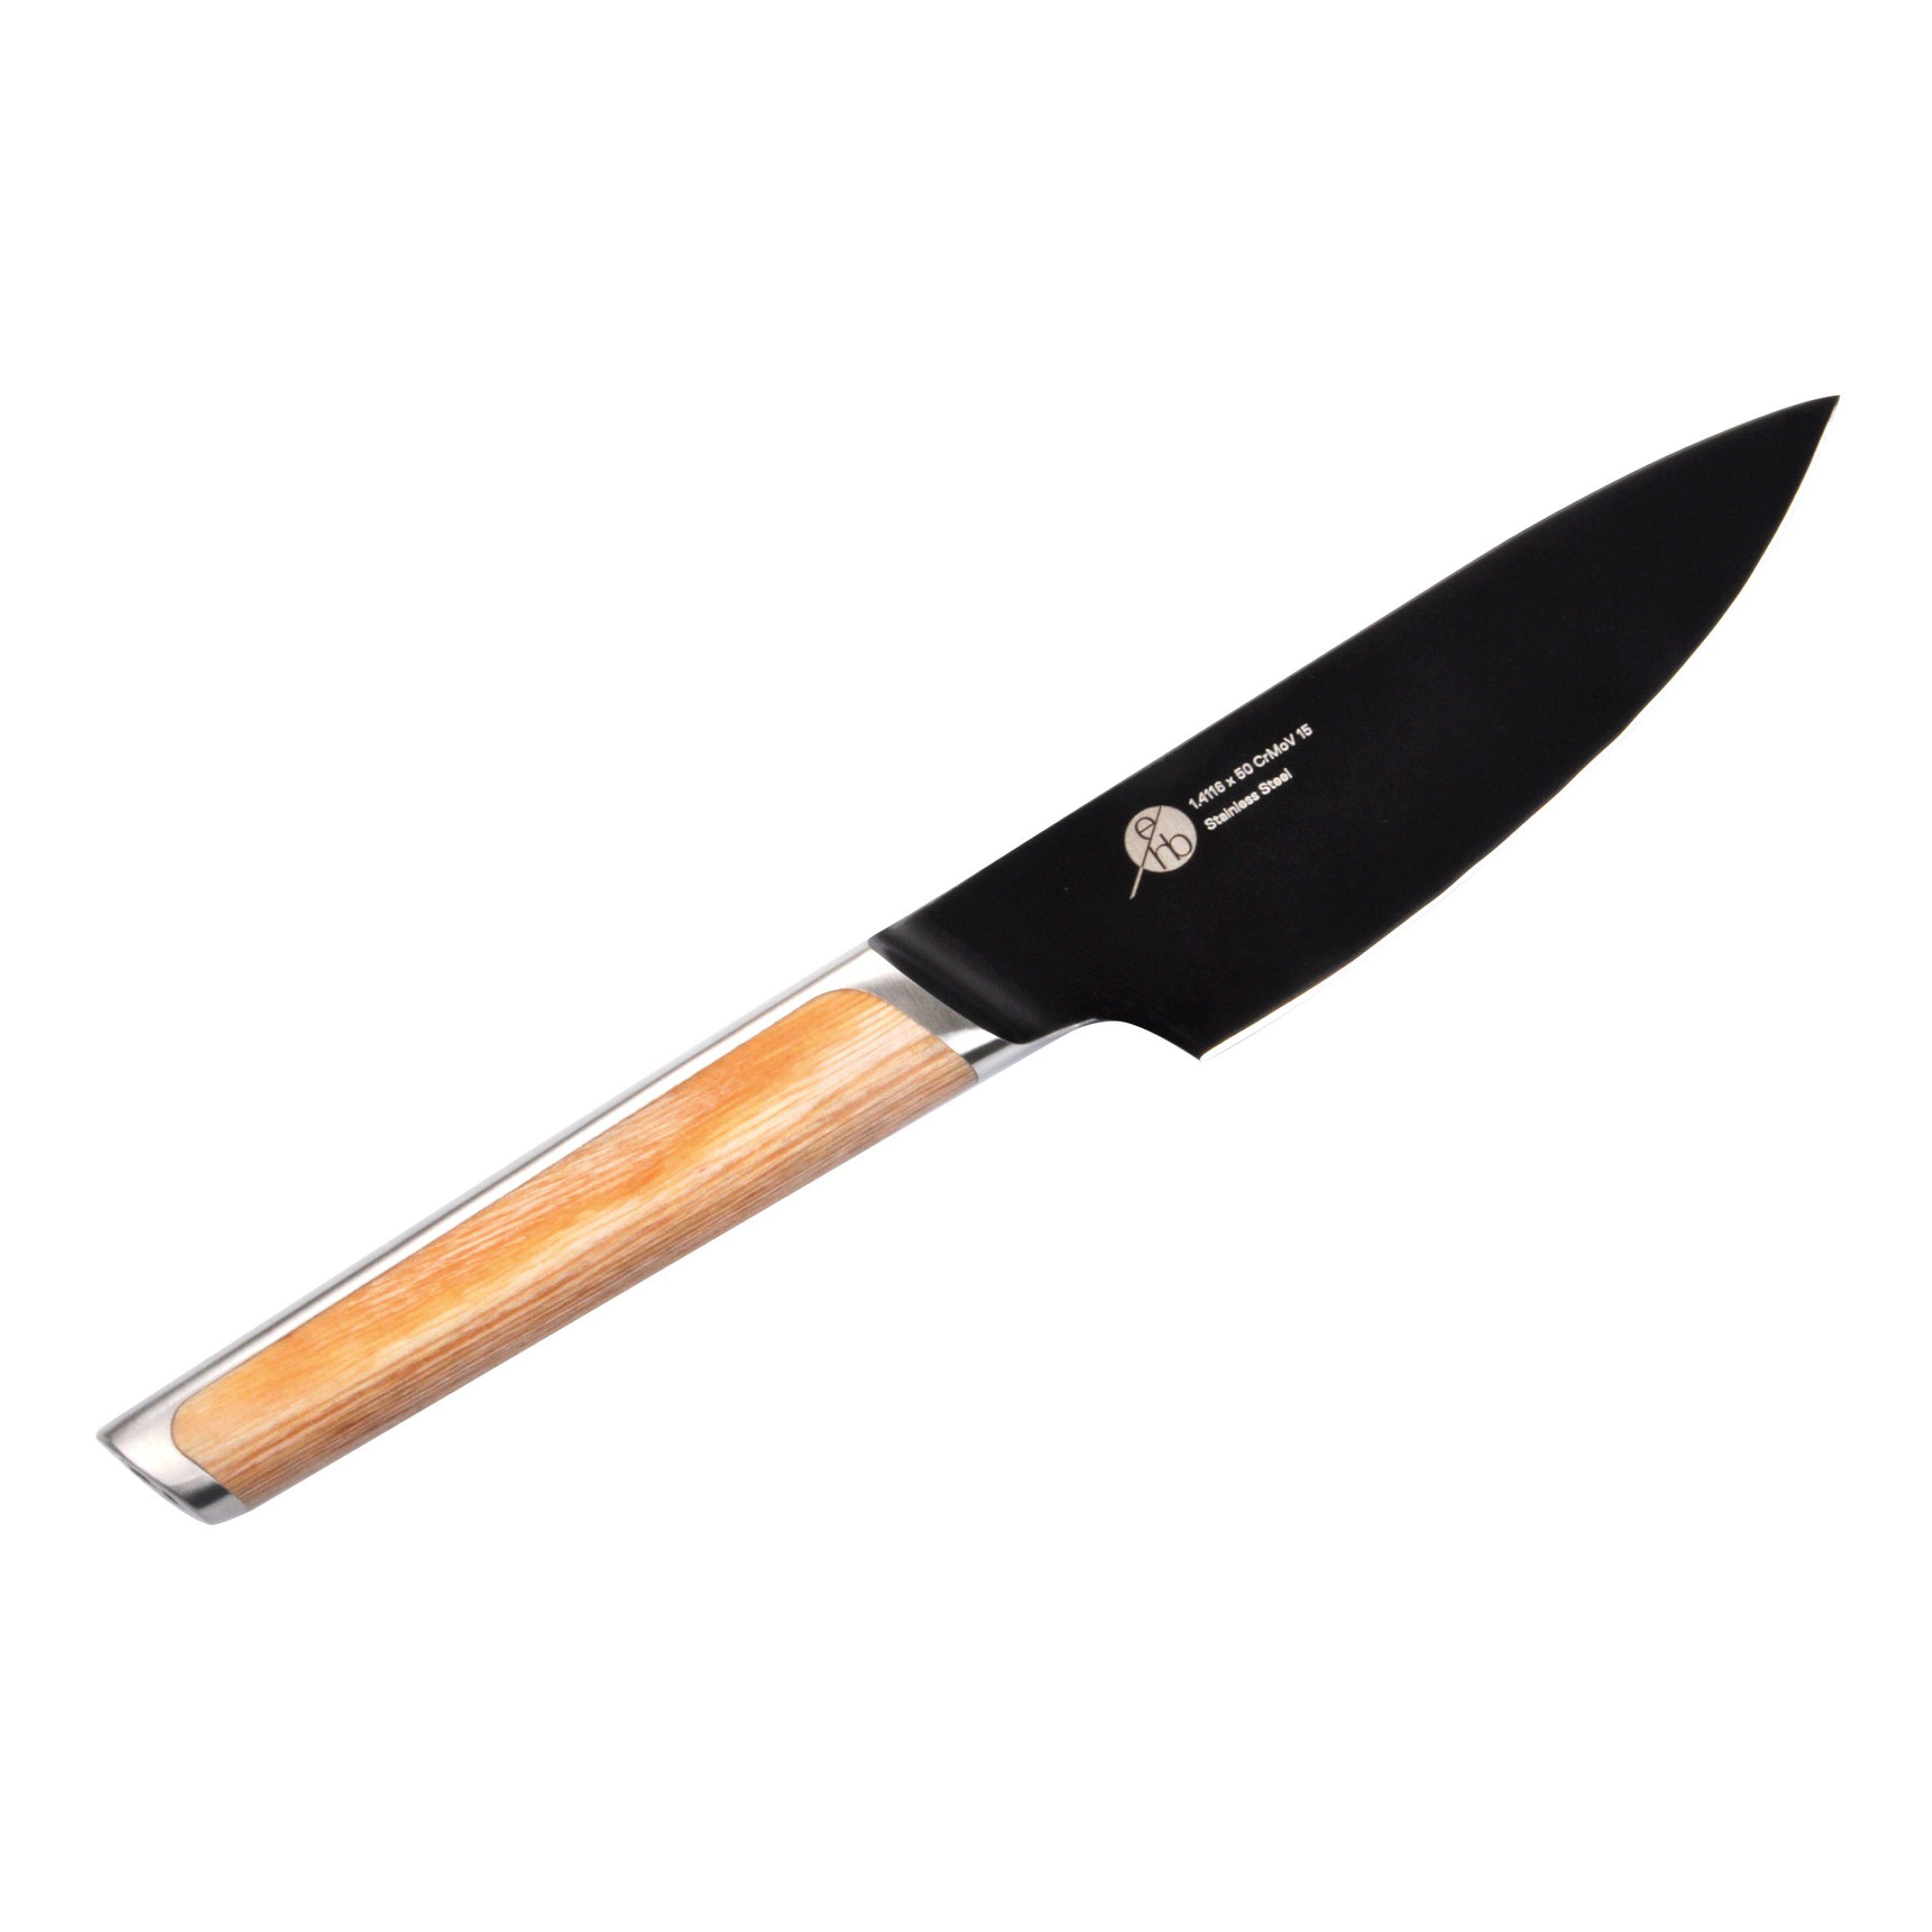 Kochmesser Premium Messer, EVERDURE verschiedene Everdure Varianten